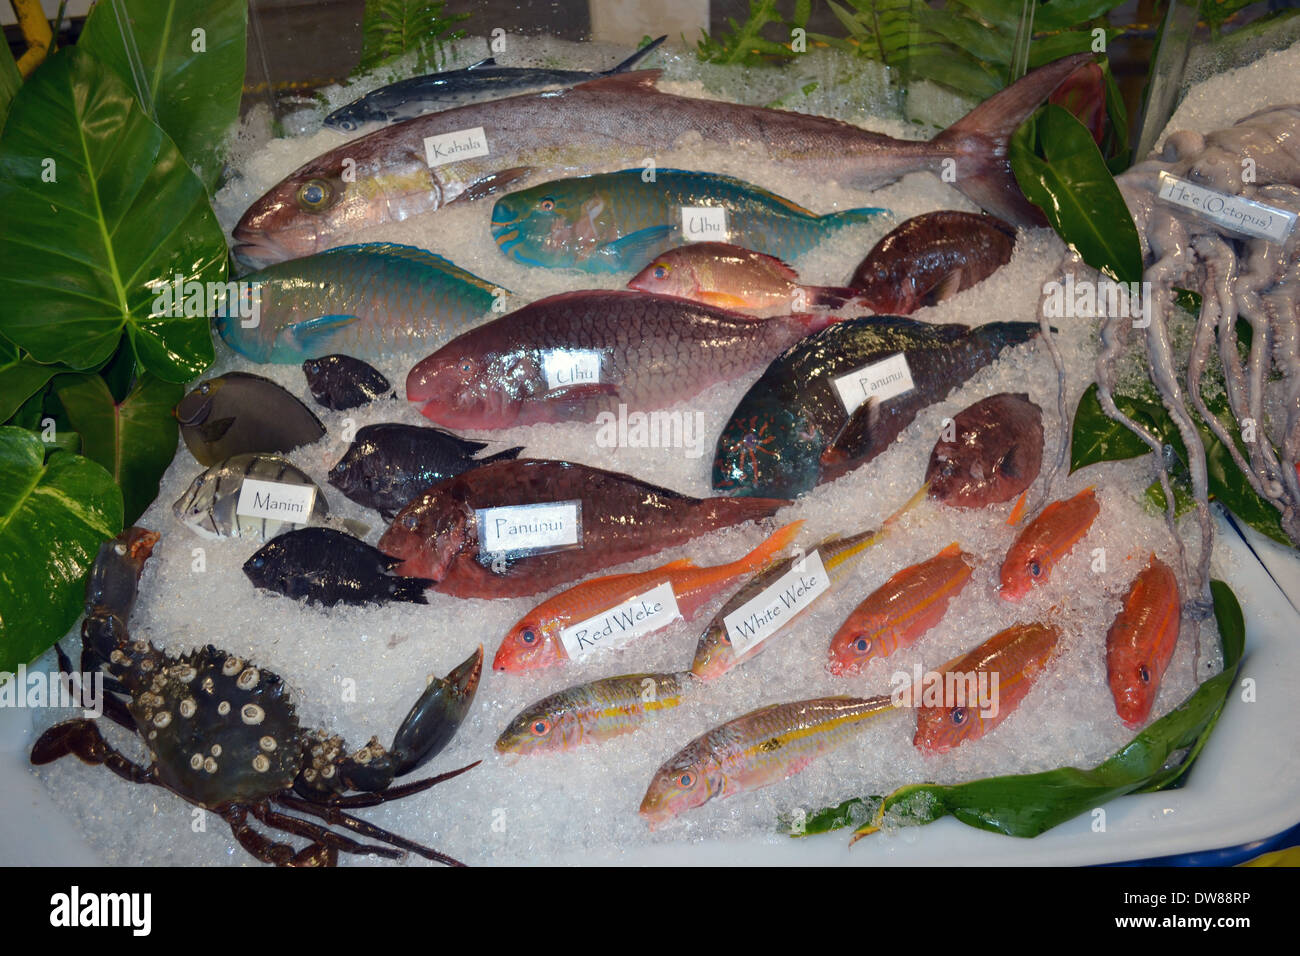 A variety of Hawaiian fishes on sale, Hawaii Seafood Festival, Oahu, Hawaii, USA Stock Photo